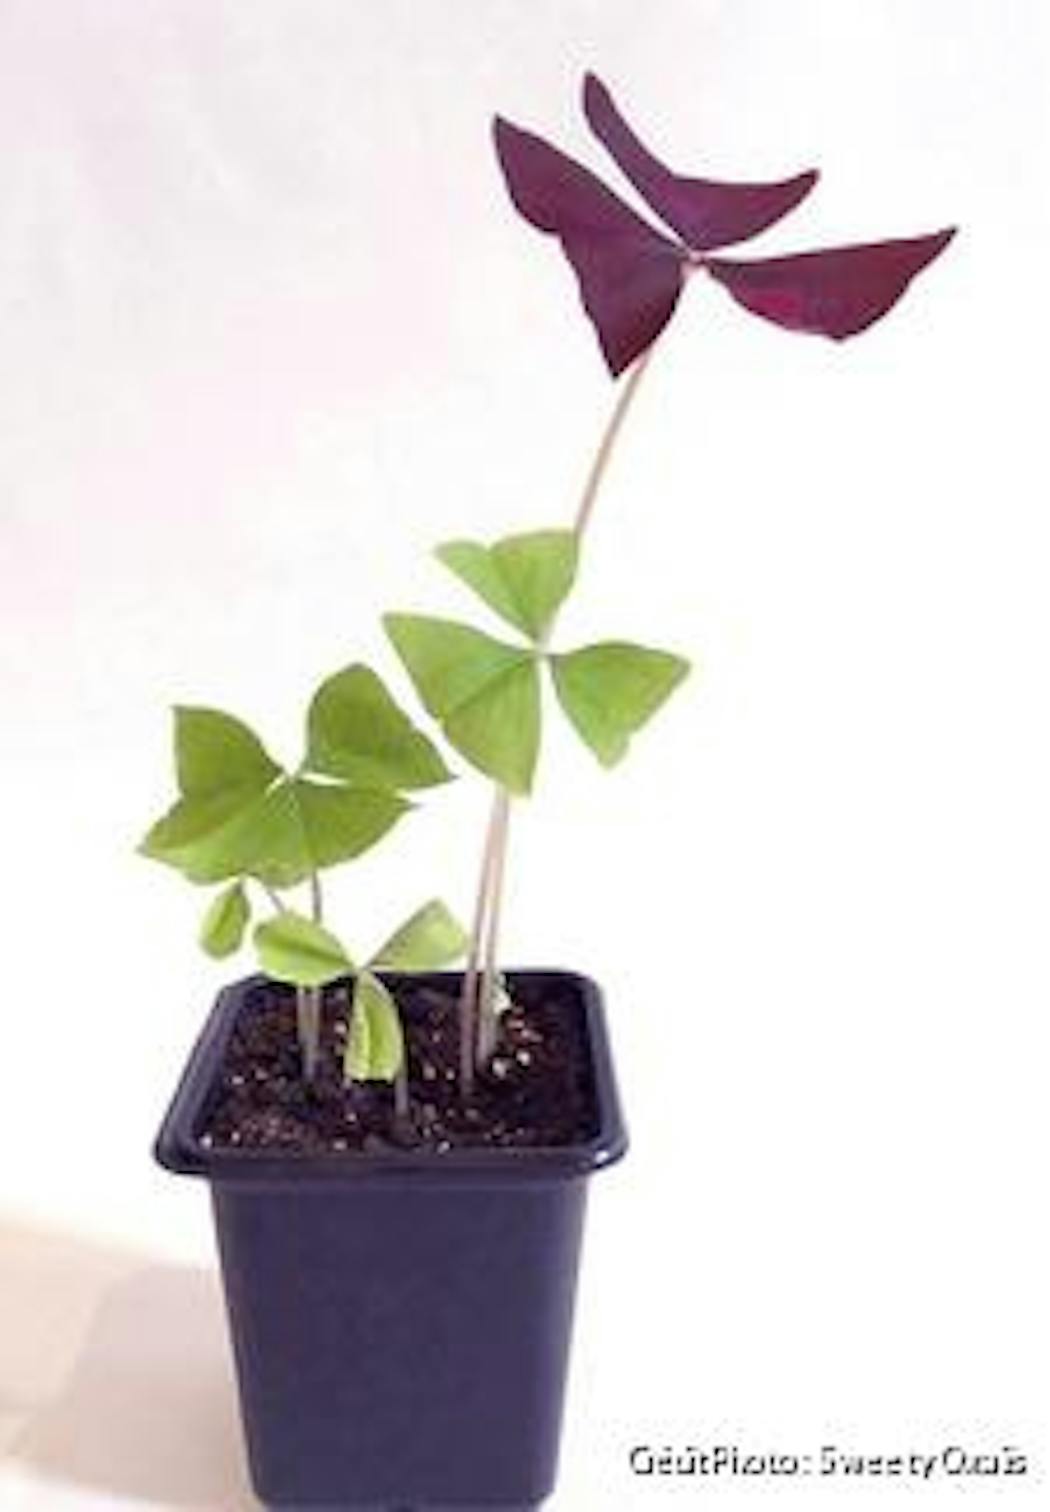 Oxalis pourpre, Oxalis triangularis 'Atropurpurea' : planter, cultiver,  multiplier